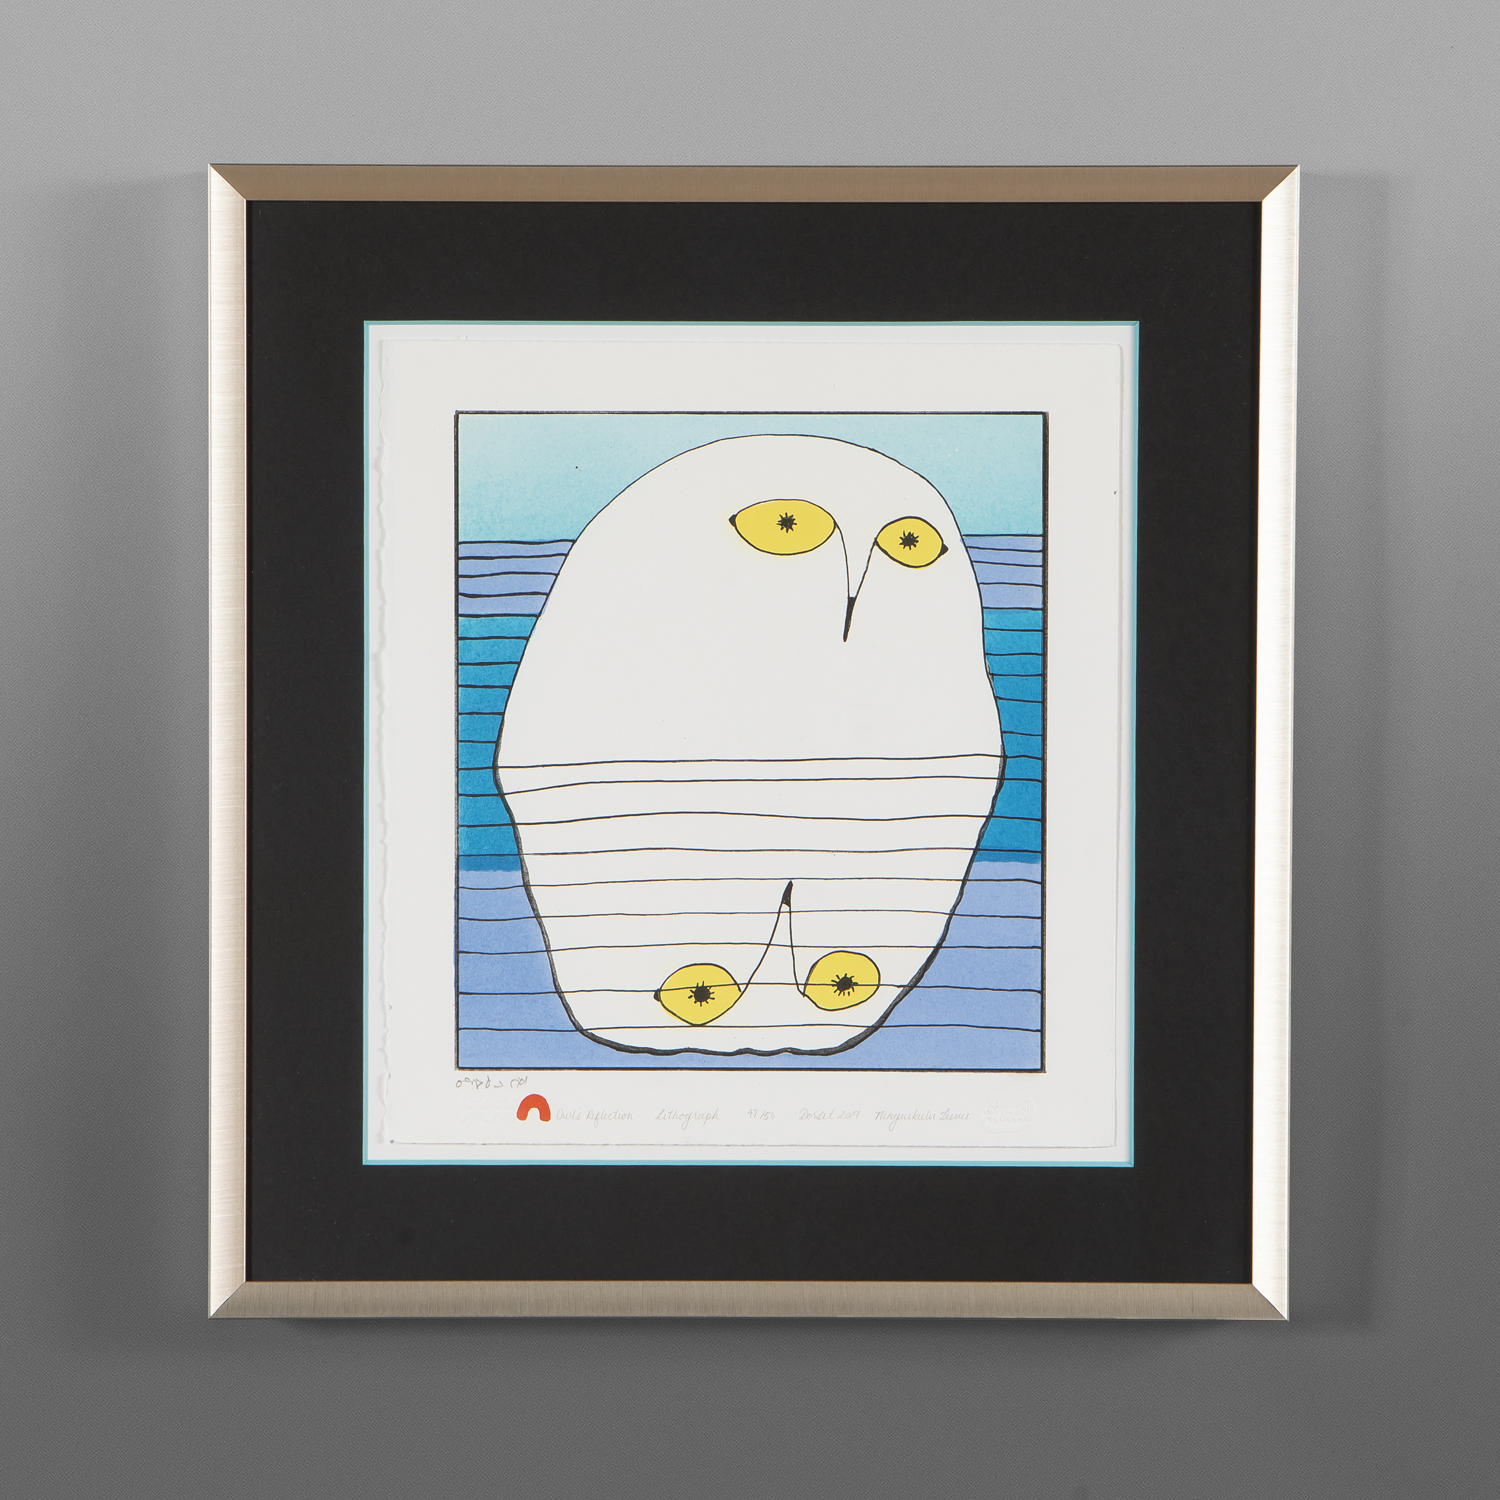 Owl's Reflection
Ningiukulu Teevee
Inuit
Framed lithograph
15 ¾” x 14¾”
$